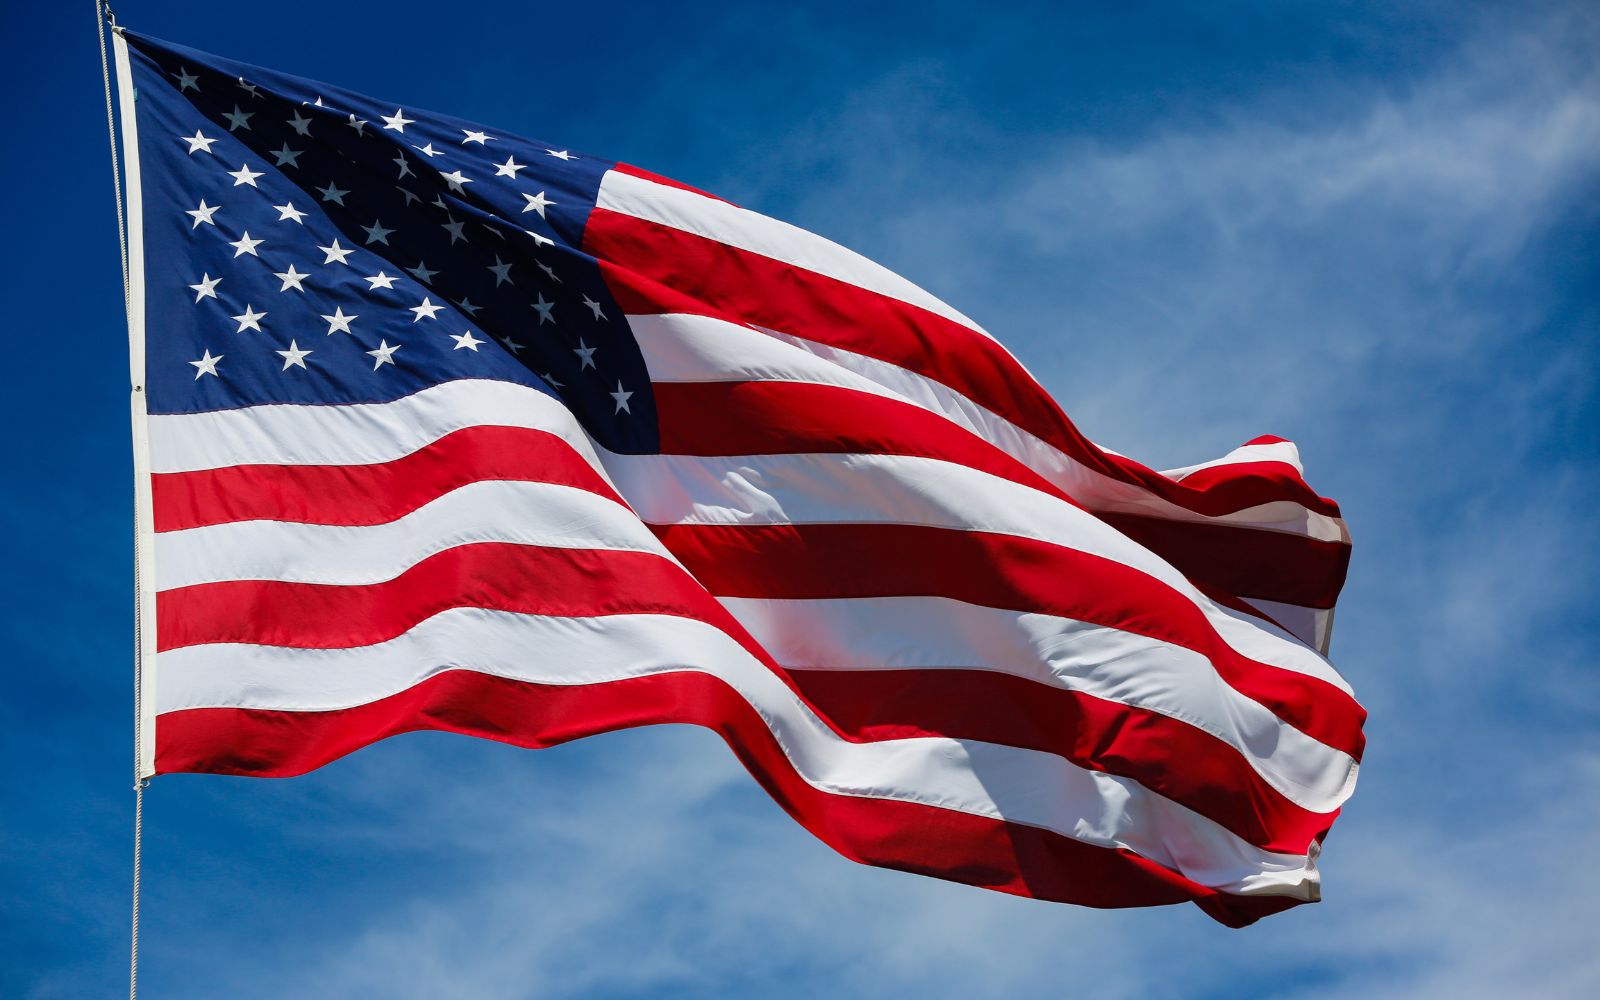 the US flag